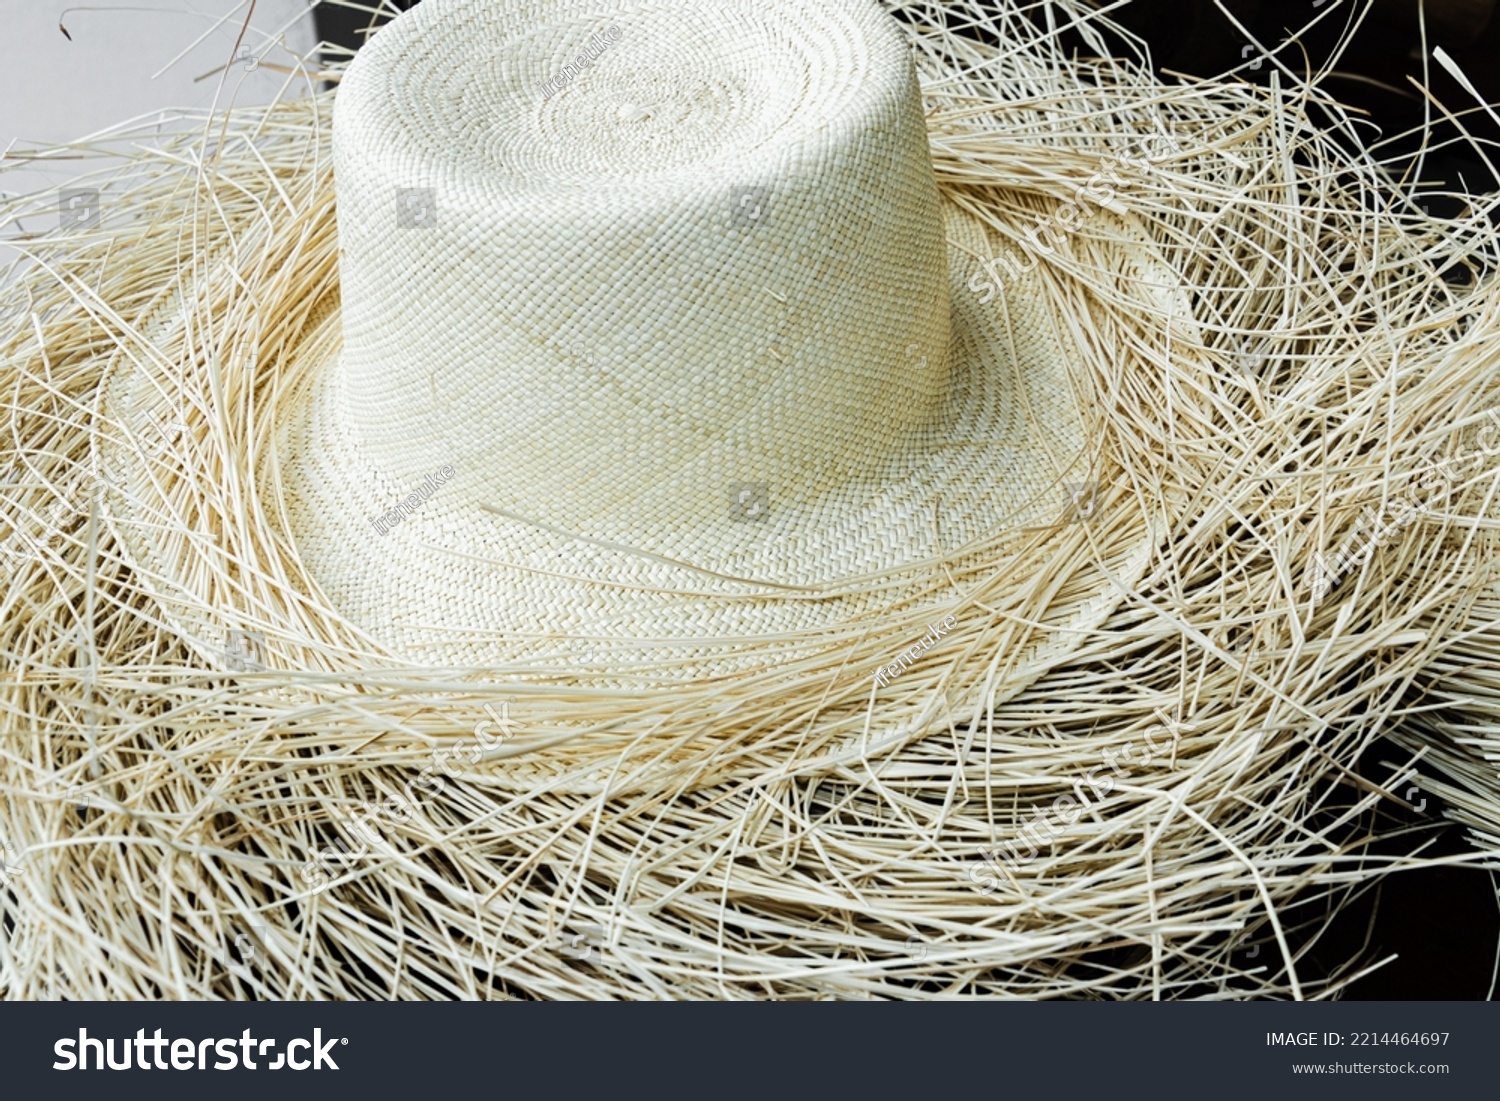 An authentic ecuadorian handmade Panama hat or Paja Toquilla Hat, weaving from straw. Popular souvenir from South America. Cuenca, Ecuador #2214464697